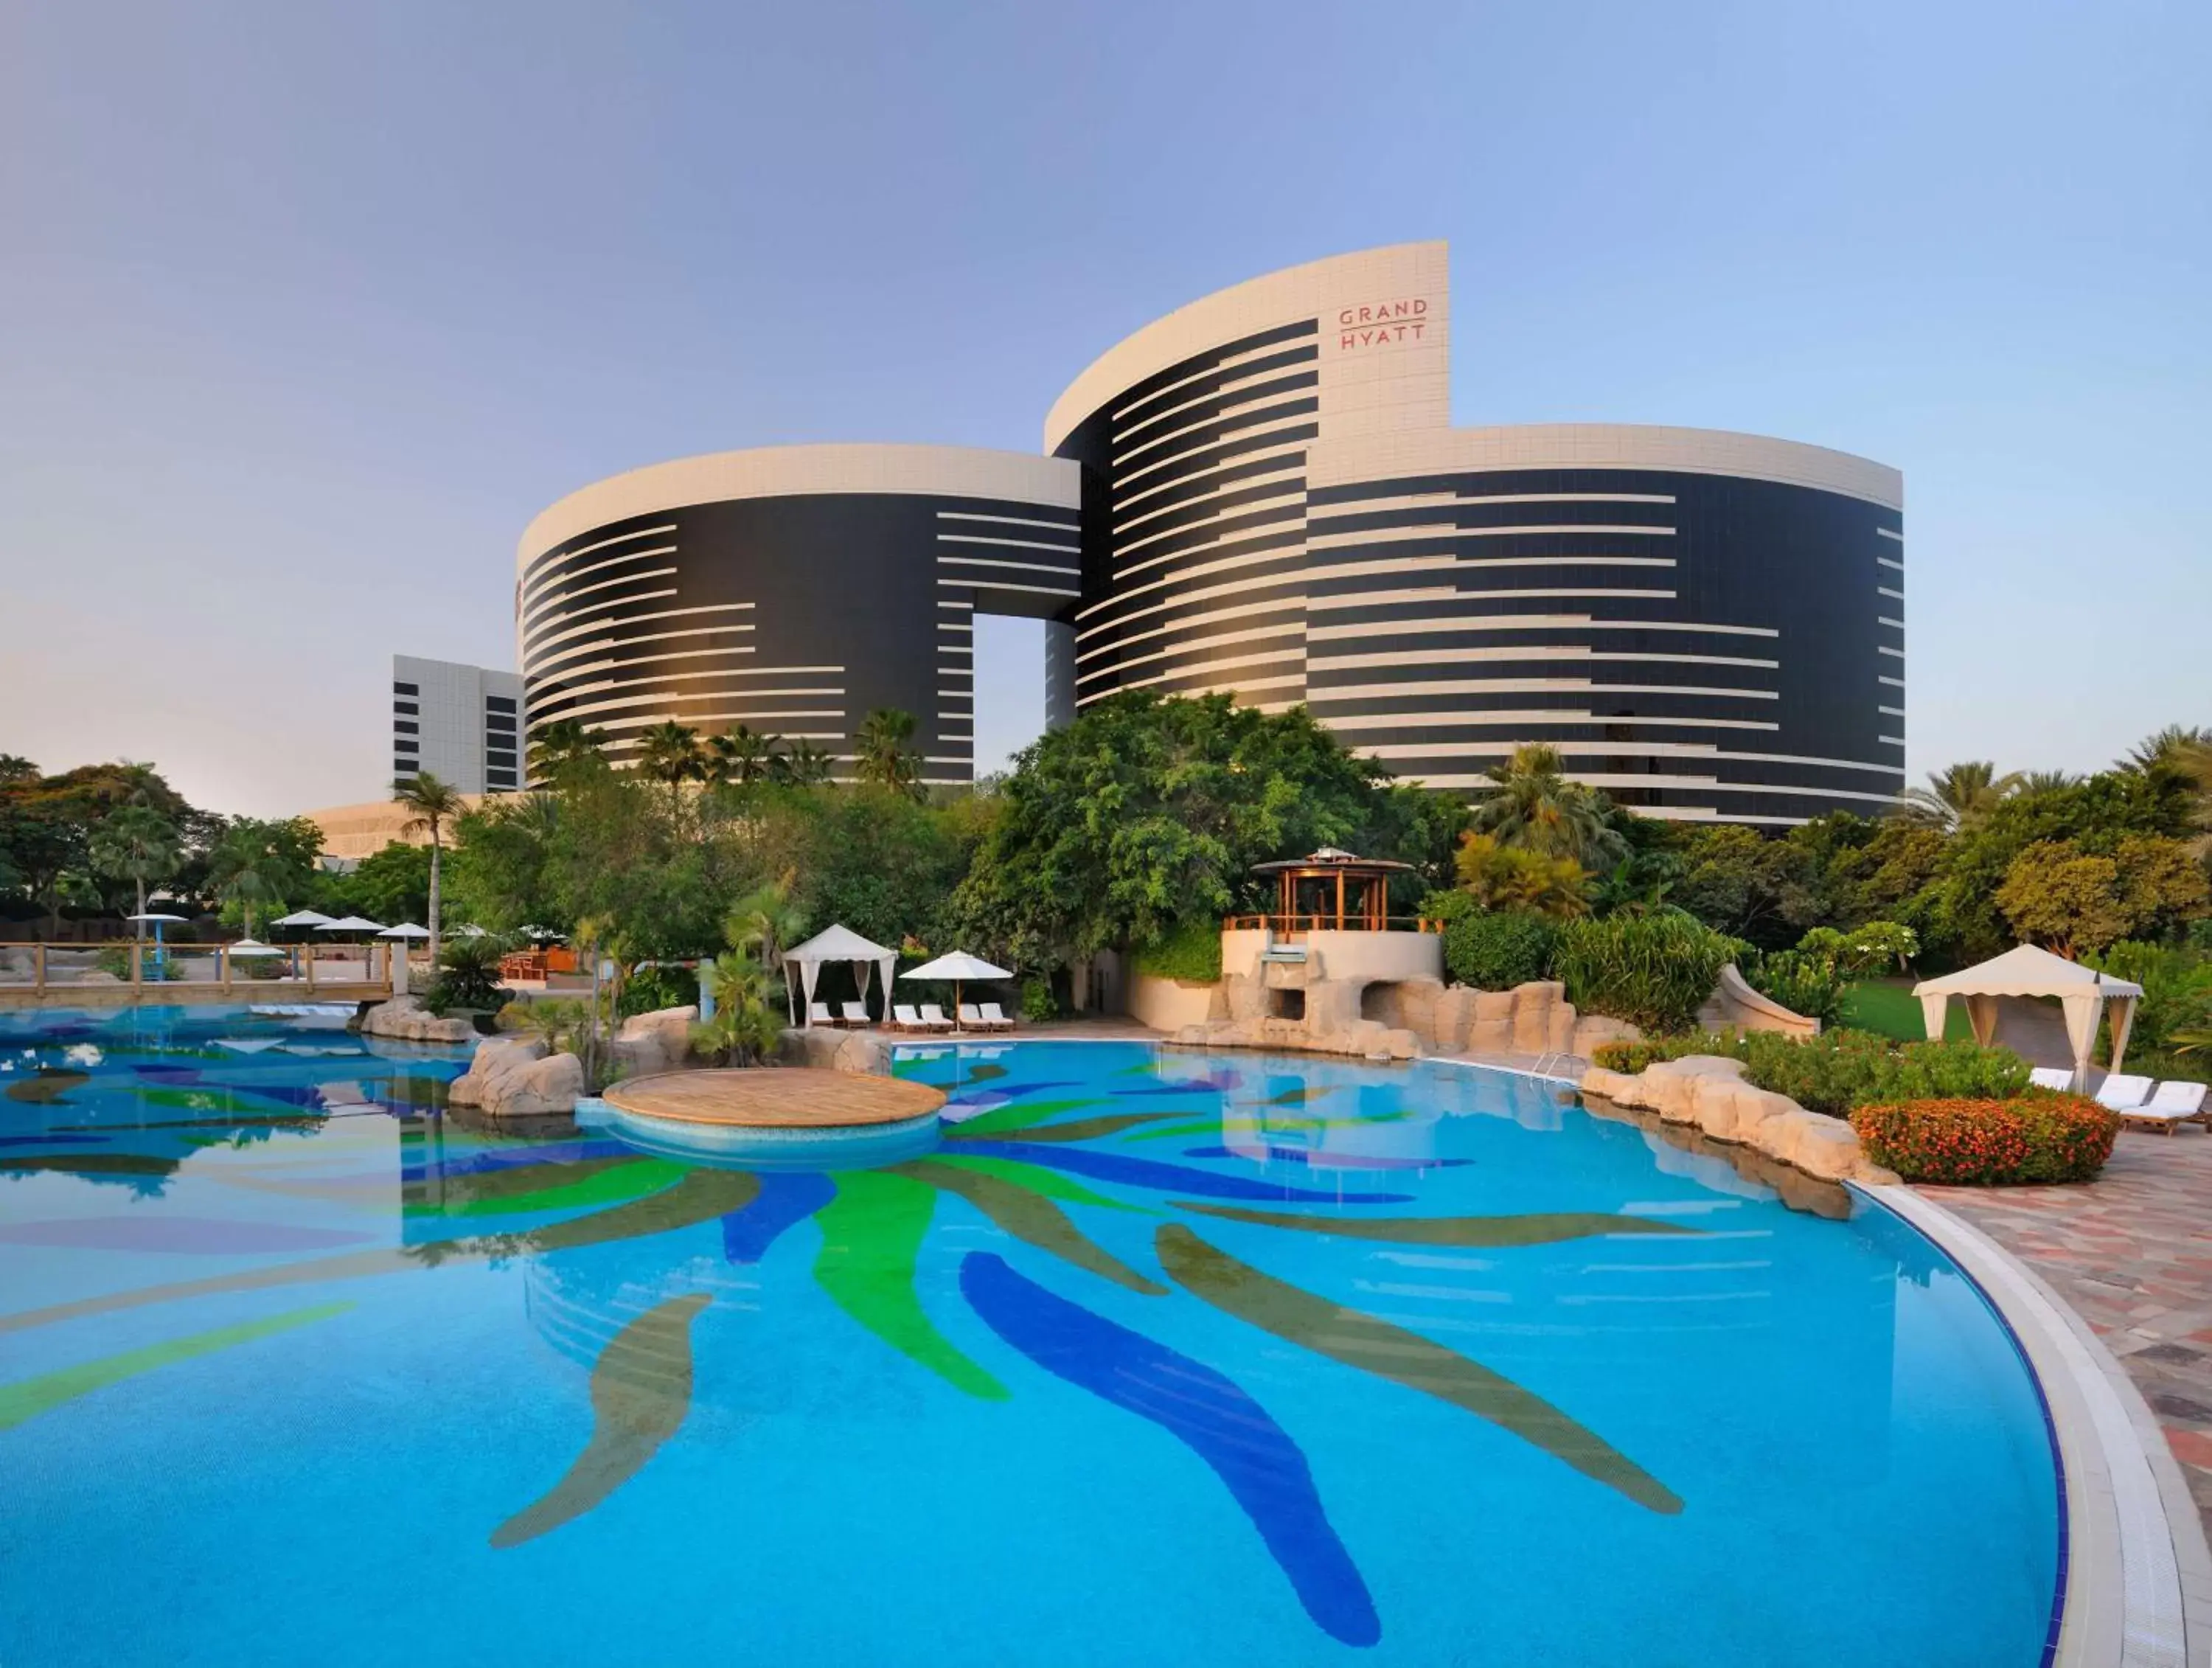 Restaurant/places to eat, Swimming Pool in Grand Hyatt Dubai